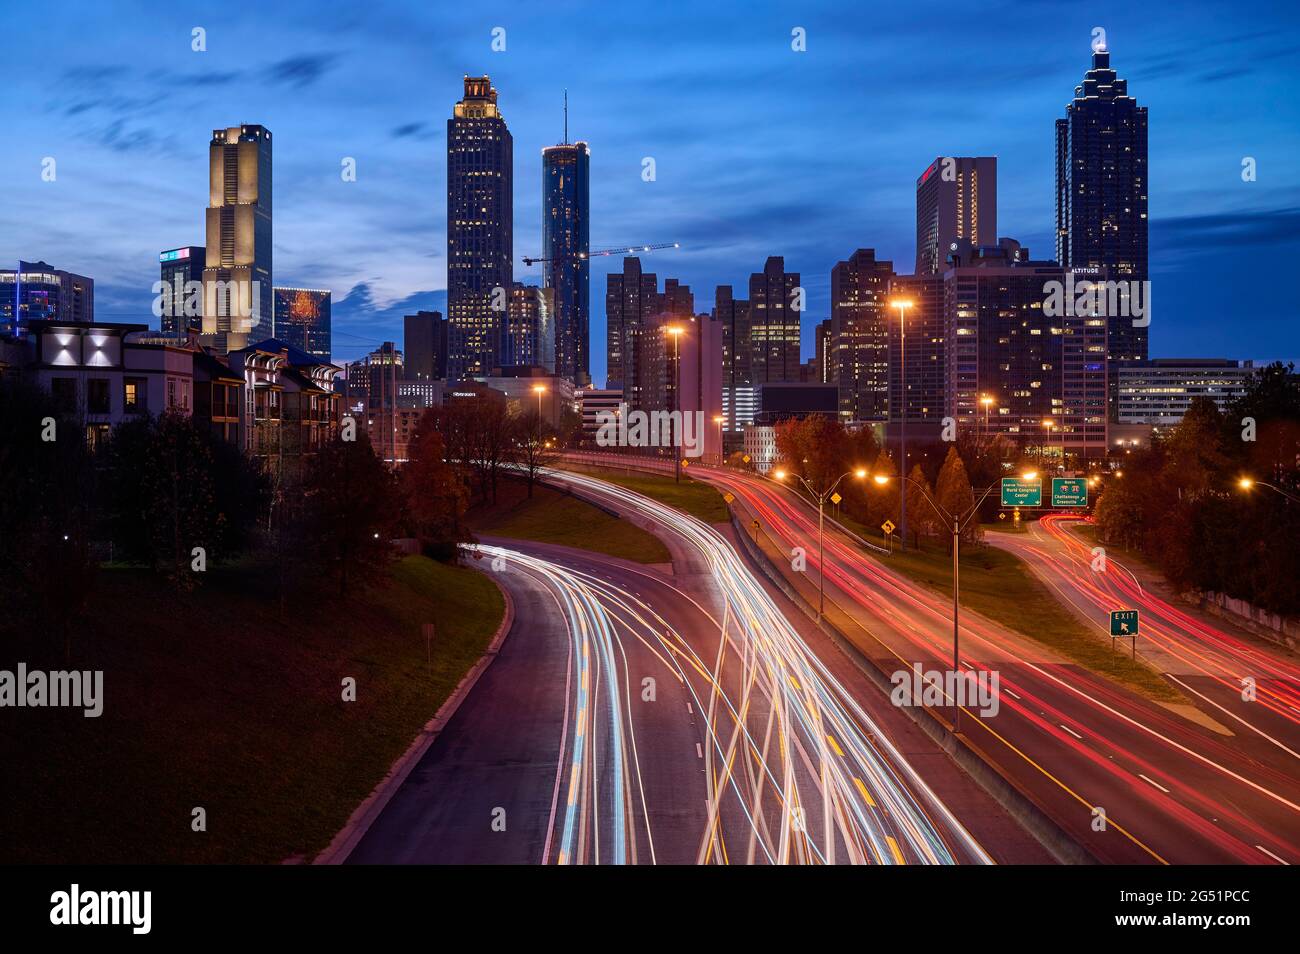 Light trails on road in city at night, Atlanta, Georgia, USA Stock Photo